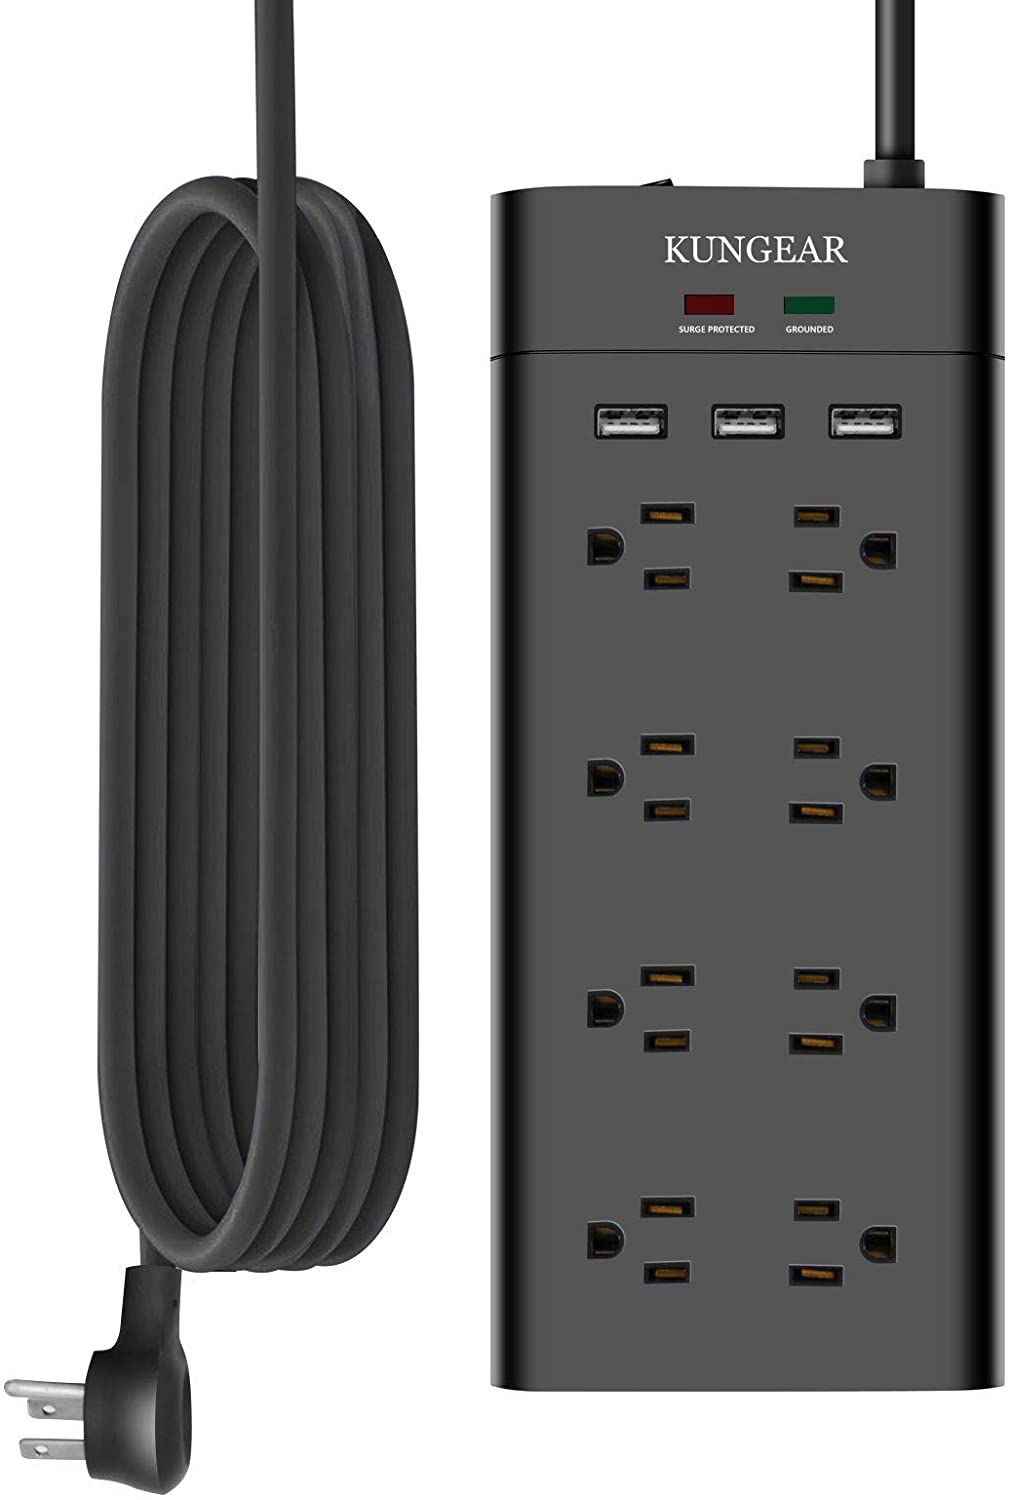 FCC ETL Listed BESTEK 8-Outlet Surge Protector Power Strip 15Amp 5V 4.2A 4 Smart USB Charging Ports Black 10-Foot Heavy Duty Extension Cord 600 Joule